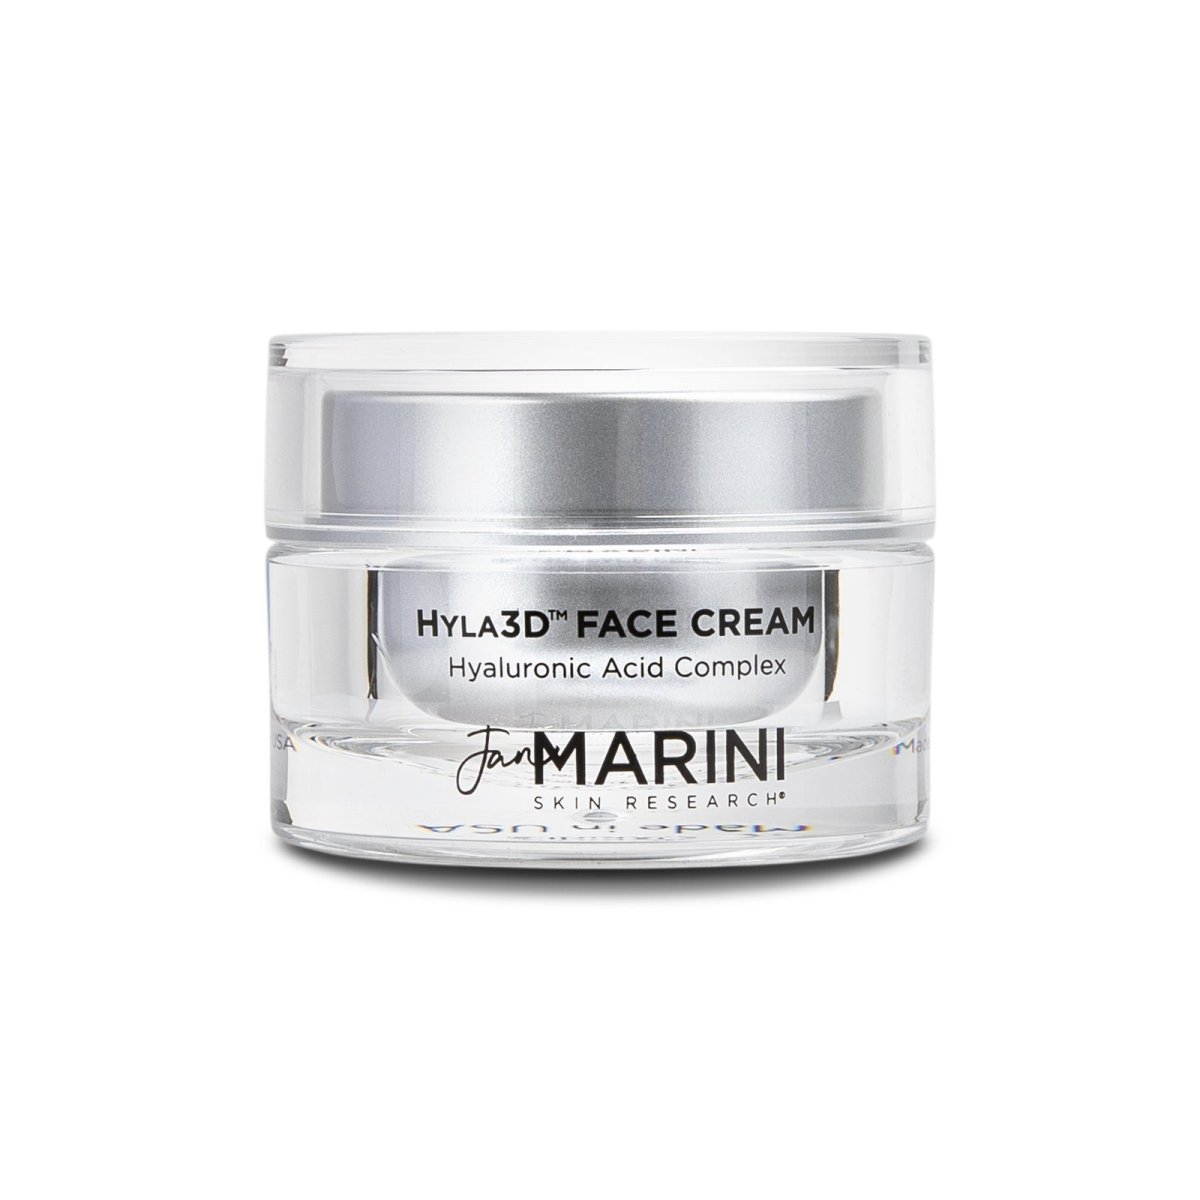 Jan Marini Hyla3D™ Face Cream - SkincareEssentials